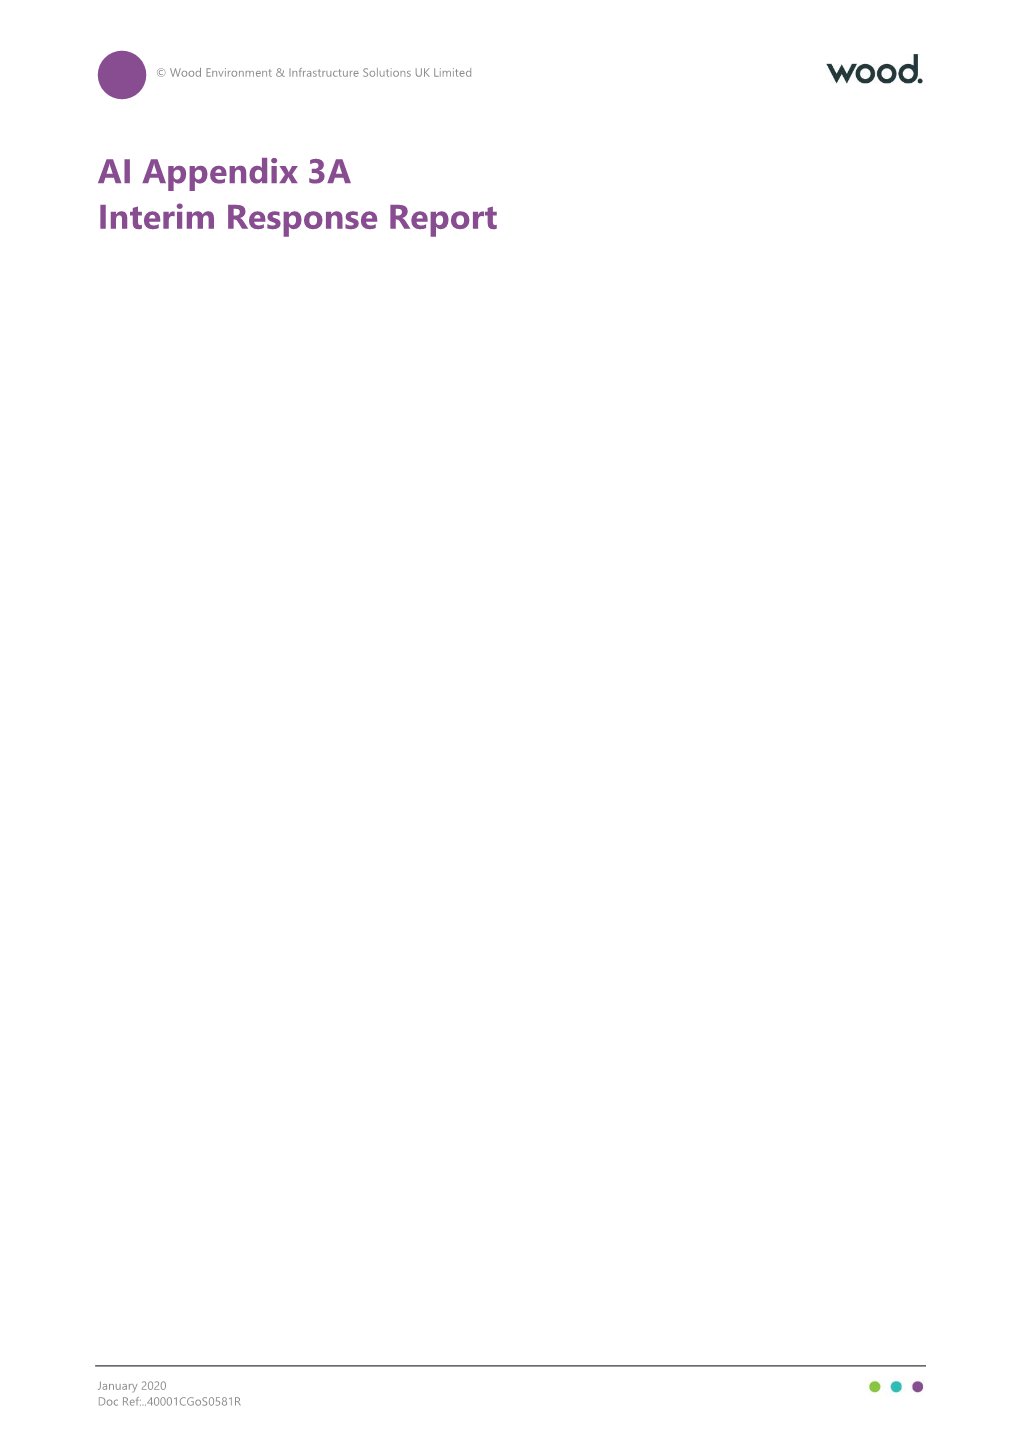 AI Appendix 3A Interim Response Report-(REDACTED)